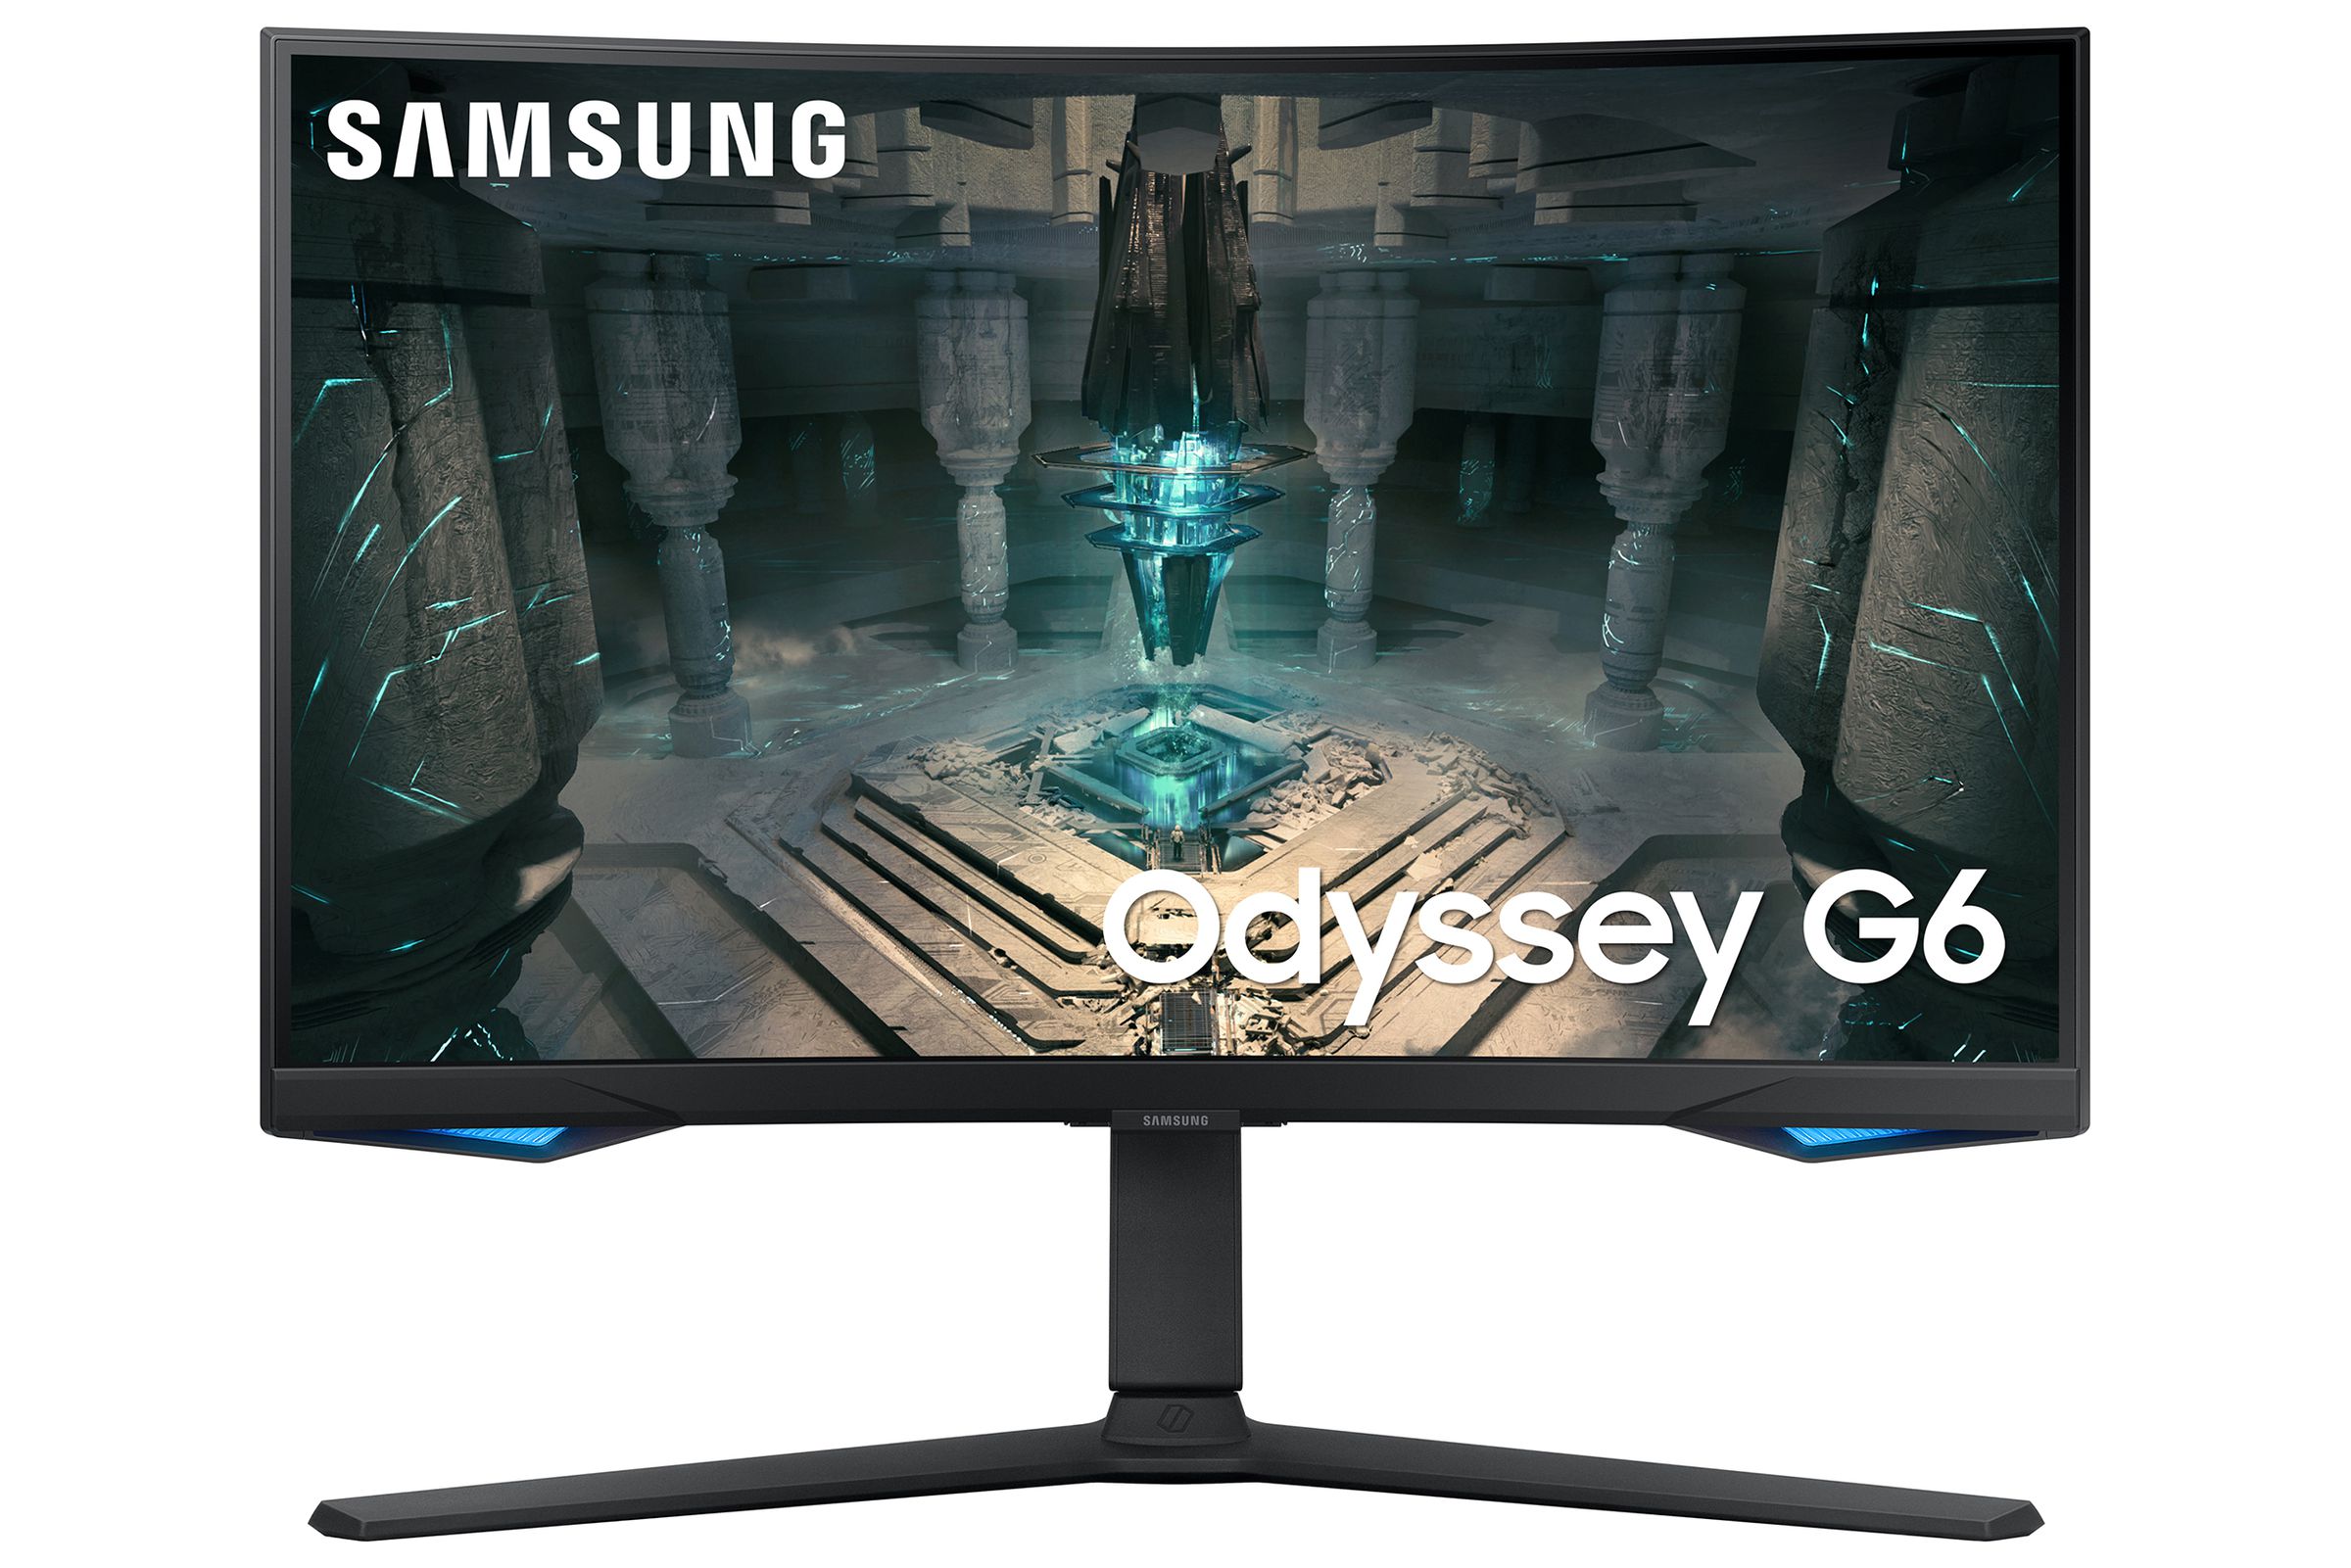 Samsung’s new Odyssey G65B monitor.